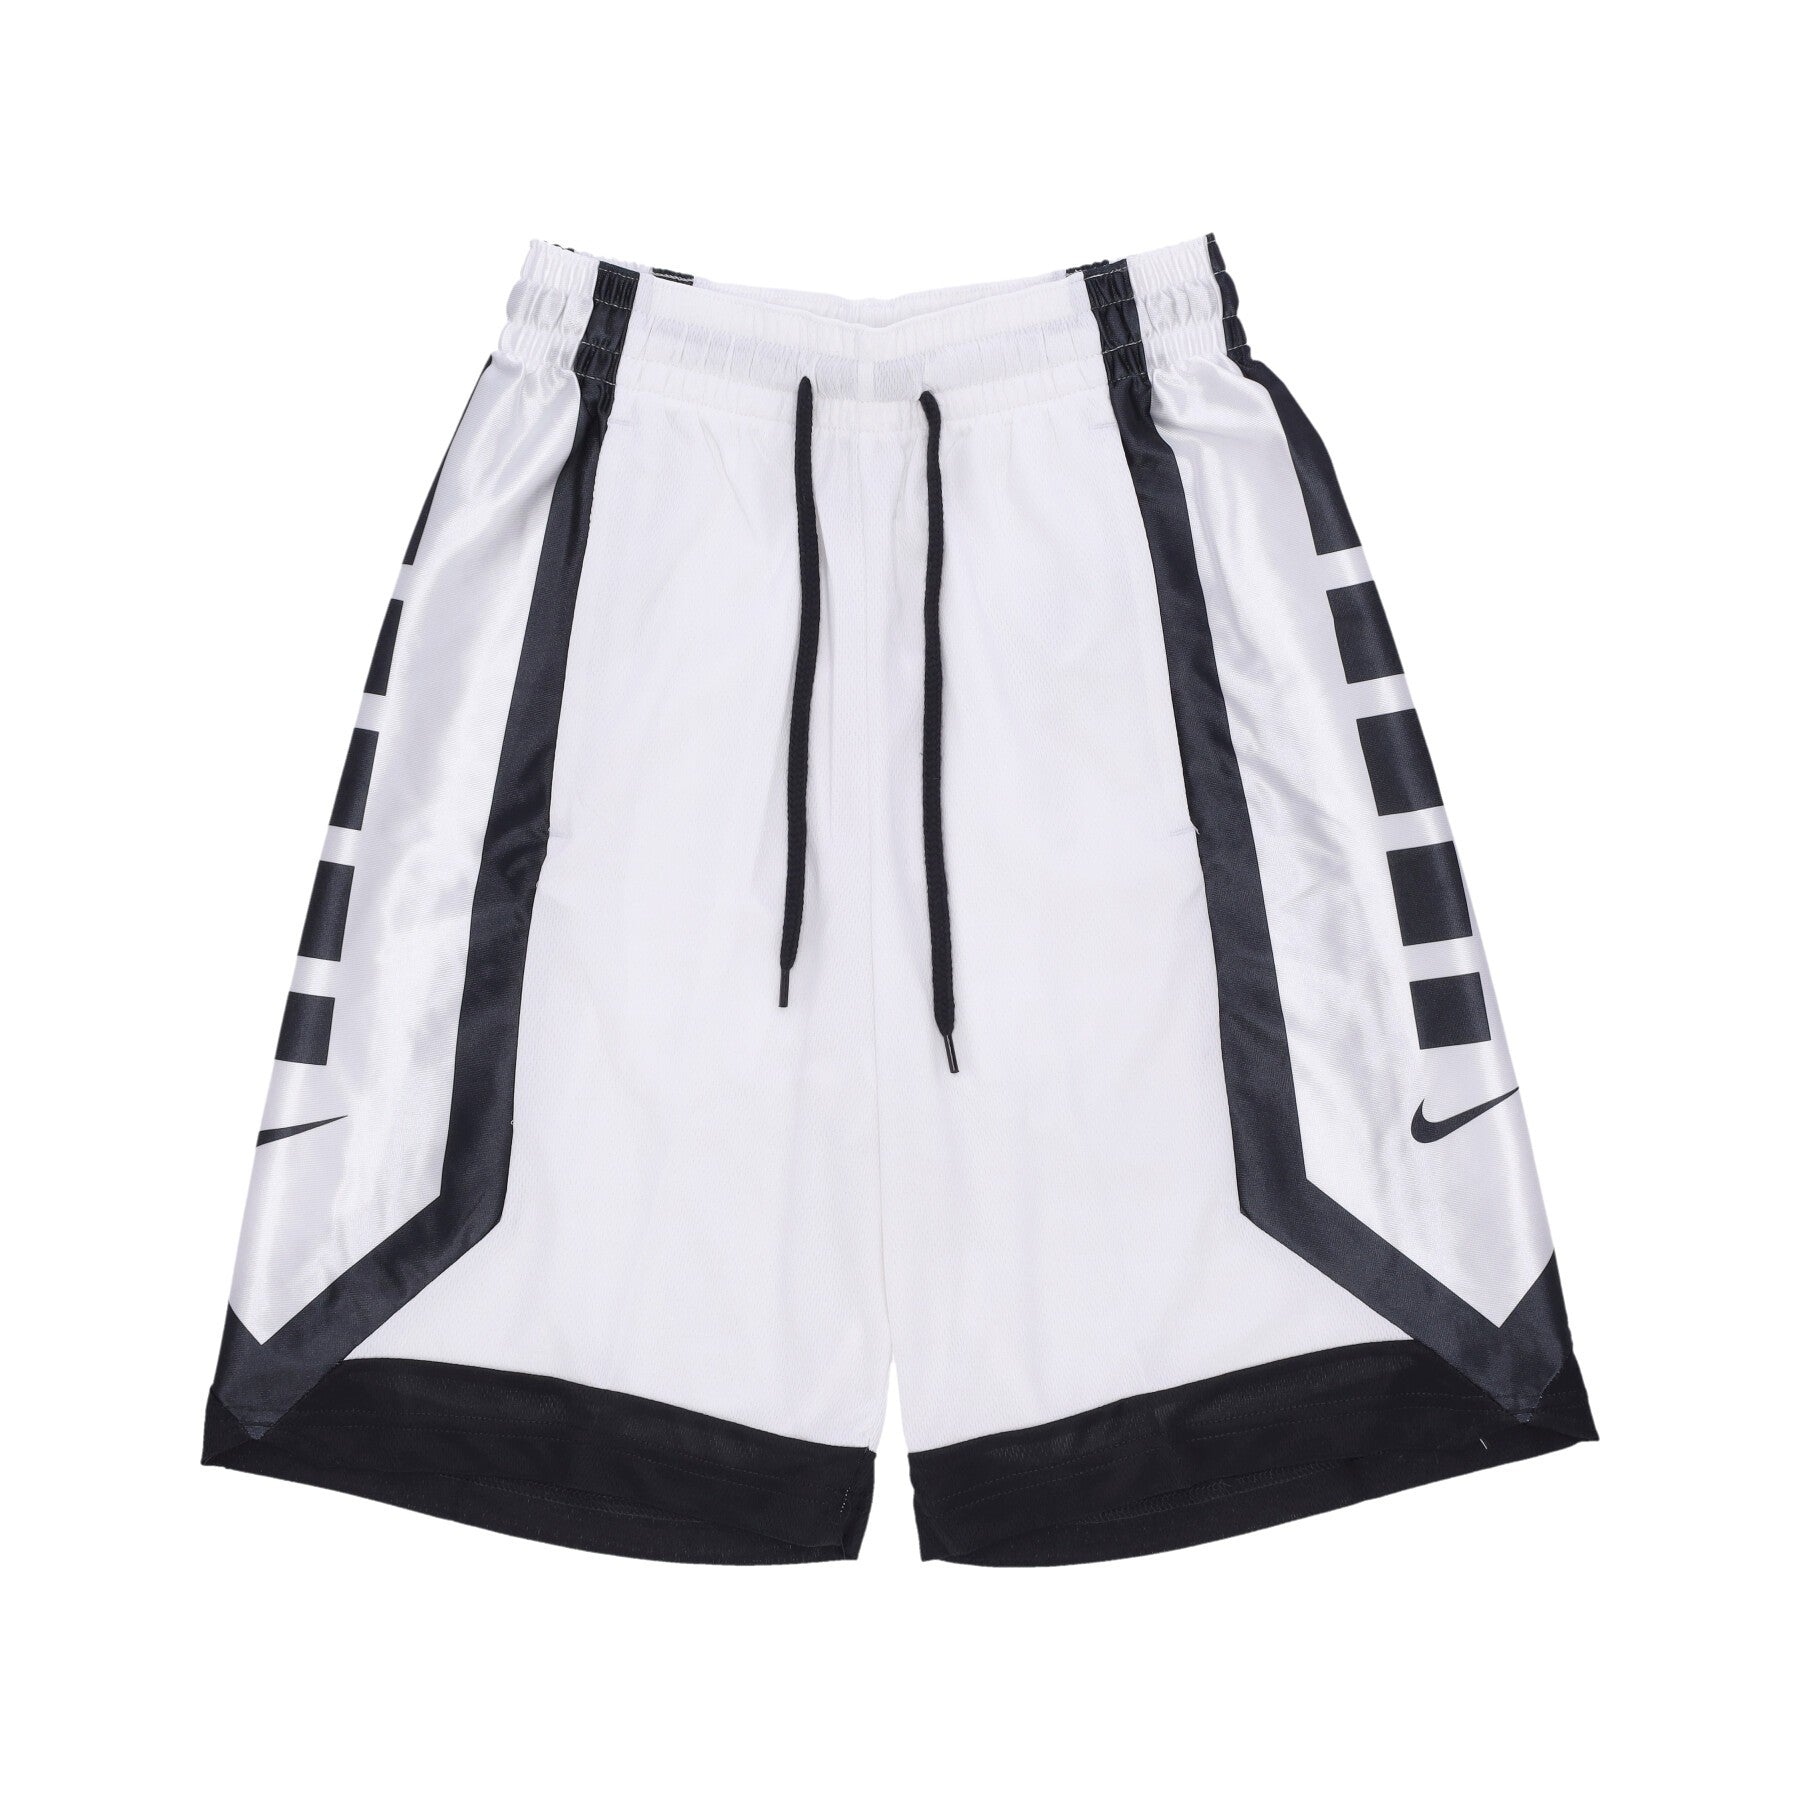 Men's Basketball Shorts Dri-fit Elite Basketball Shorts White/black/black